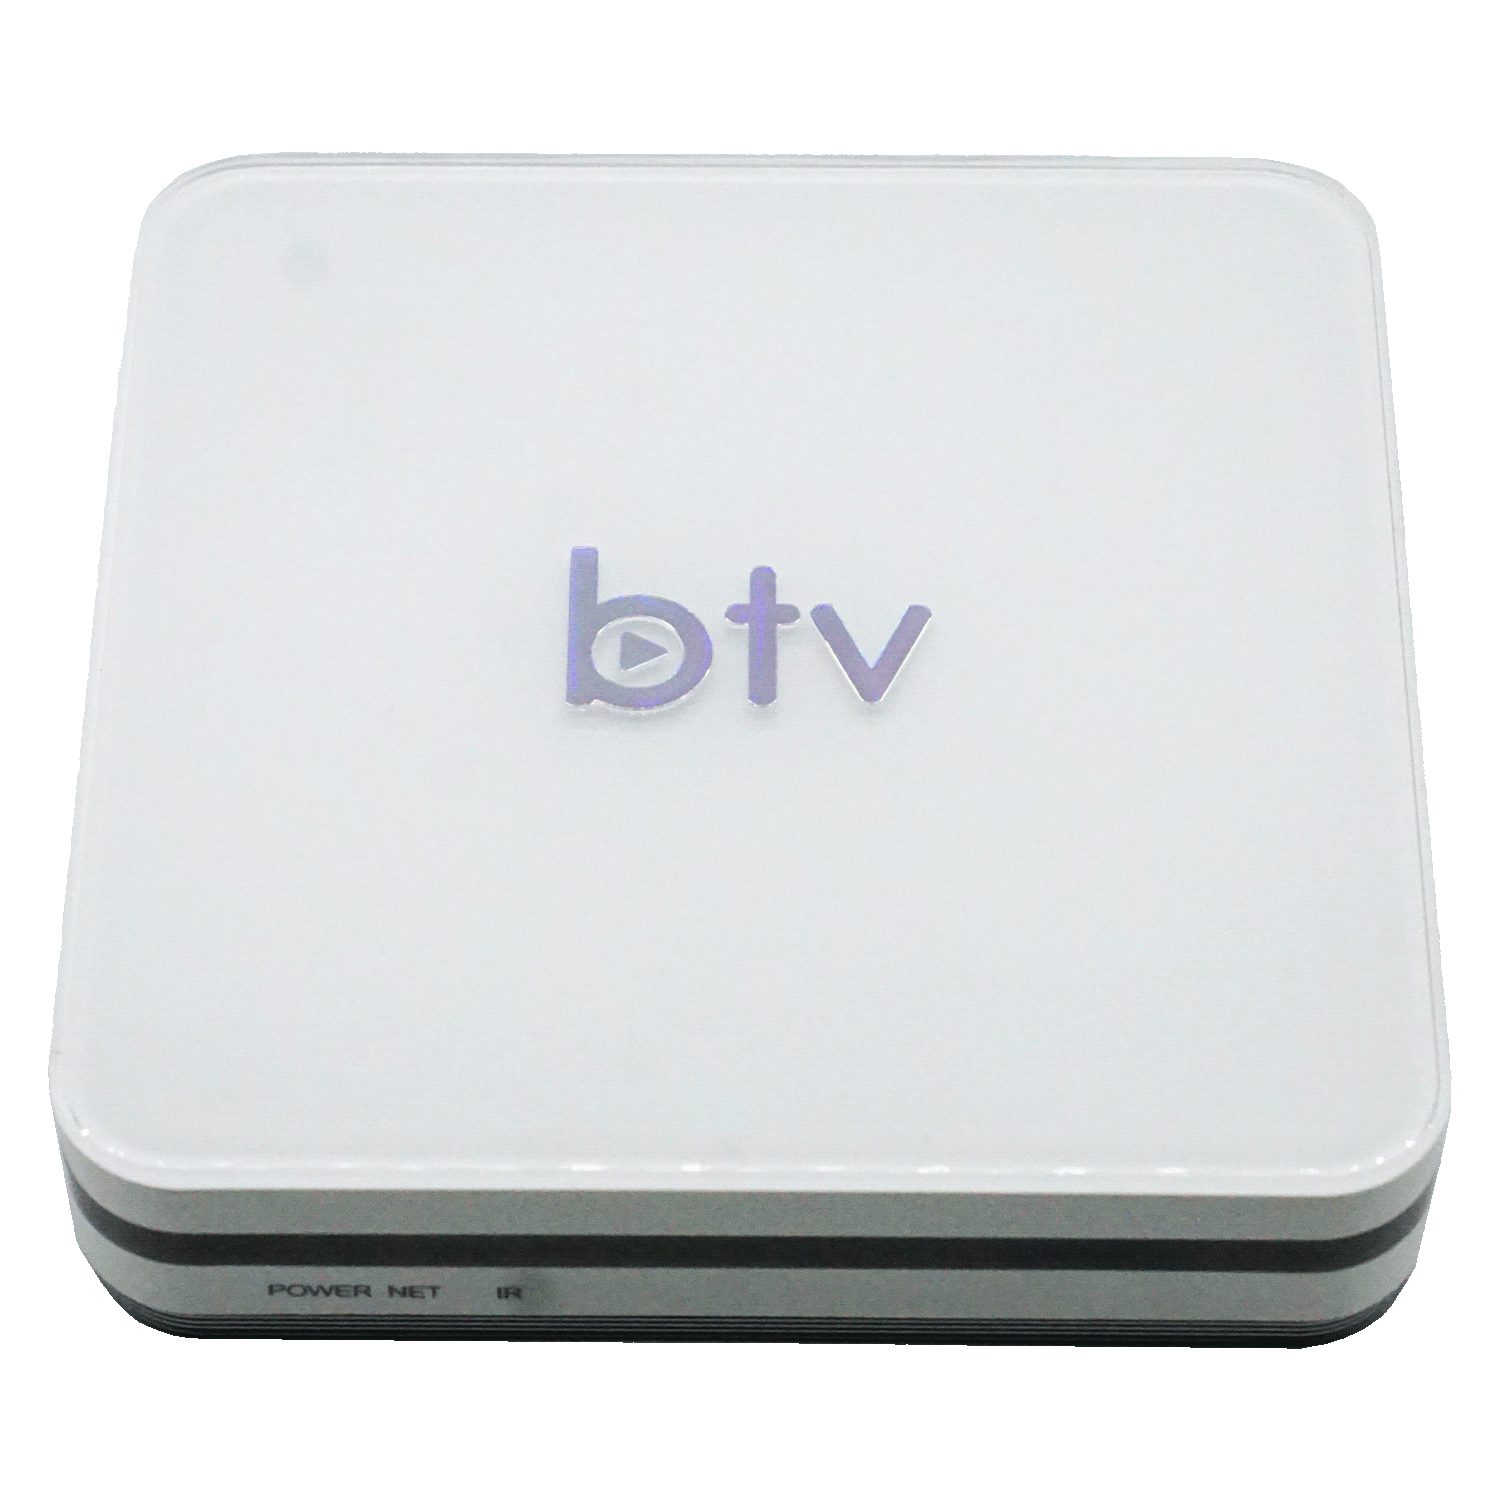 Receptor BTV B13 4K / 2GB RAM / 16GB / IPTV/ VOD / My Family / Wifi-5G / Android 11 - Branco